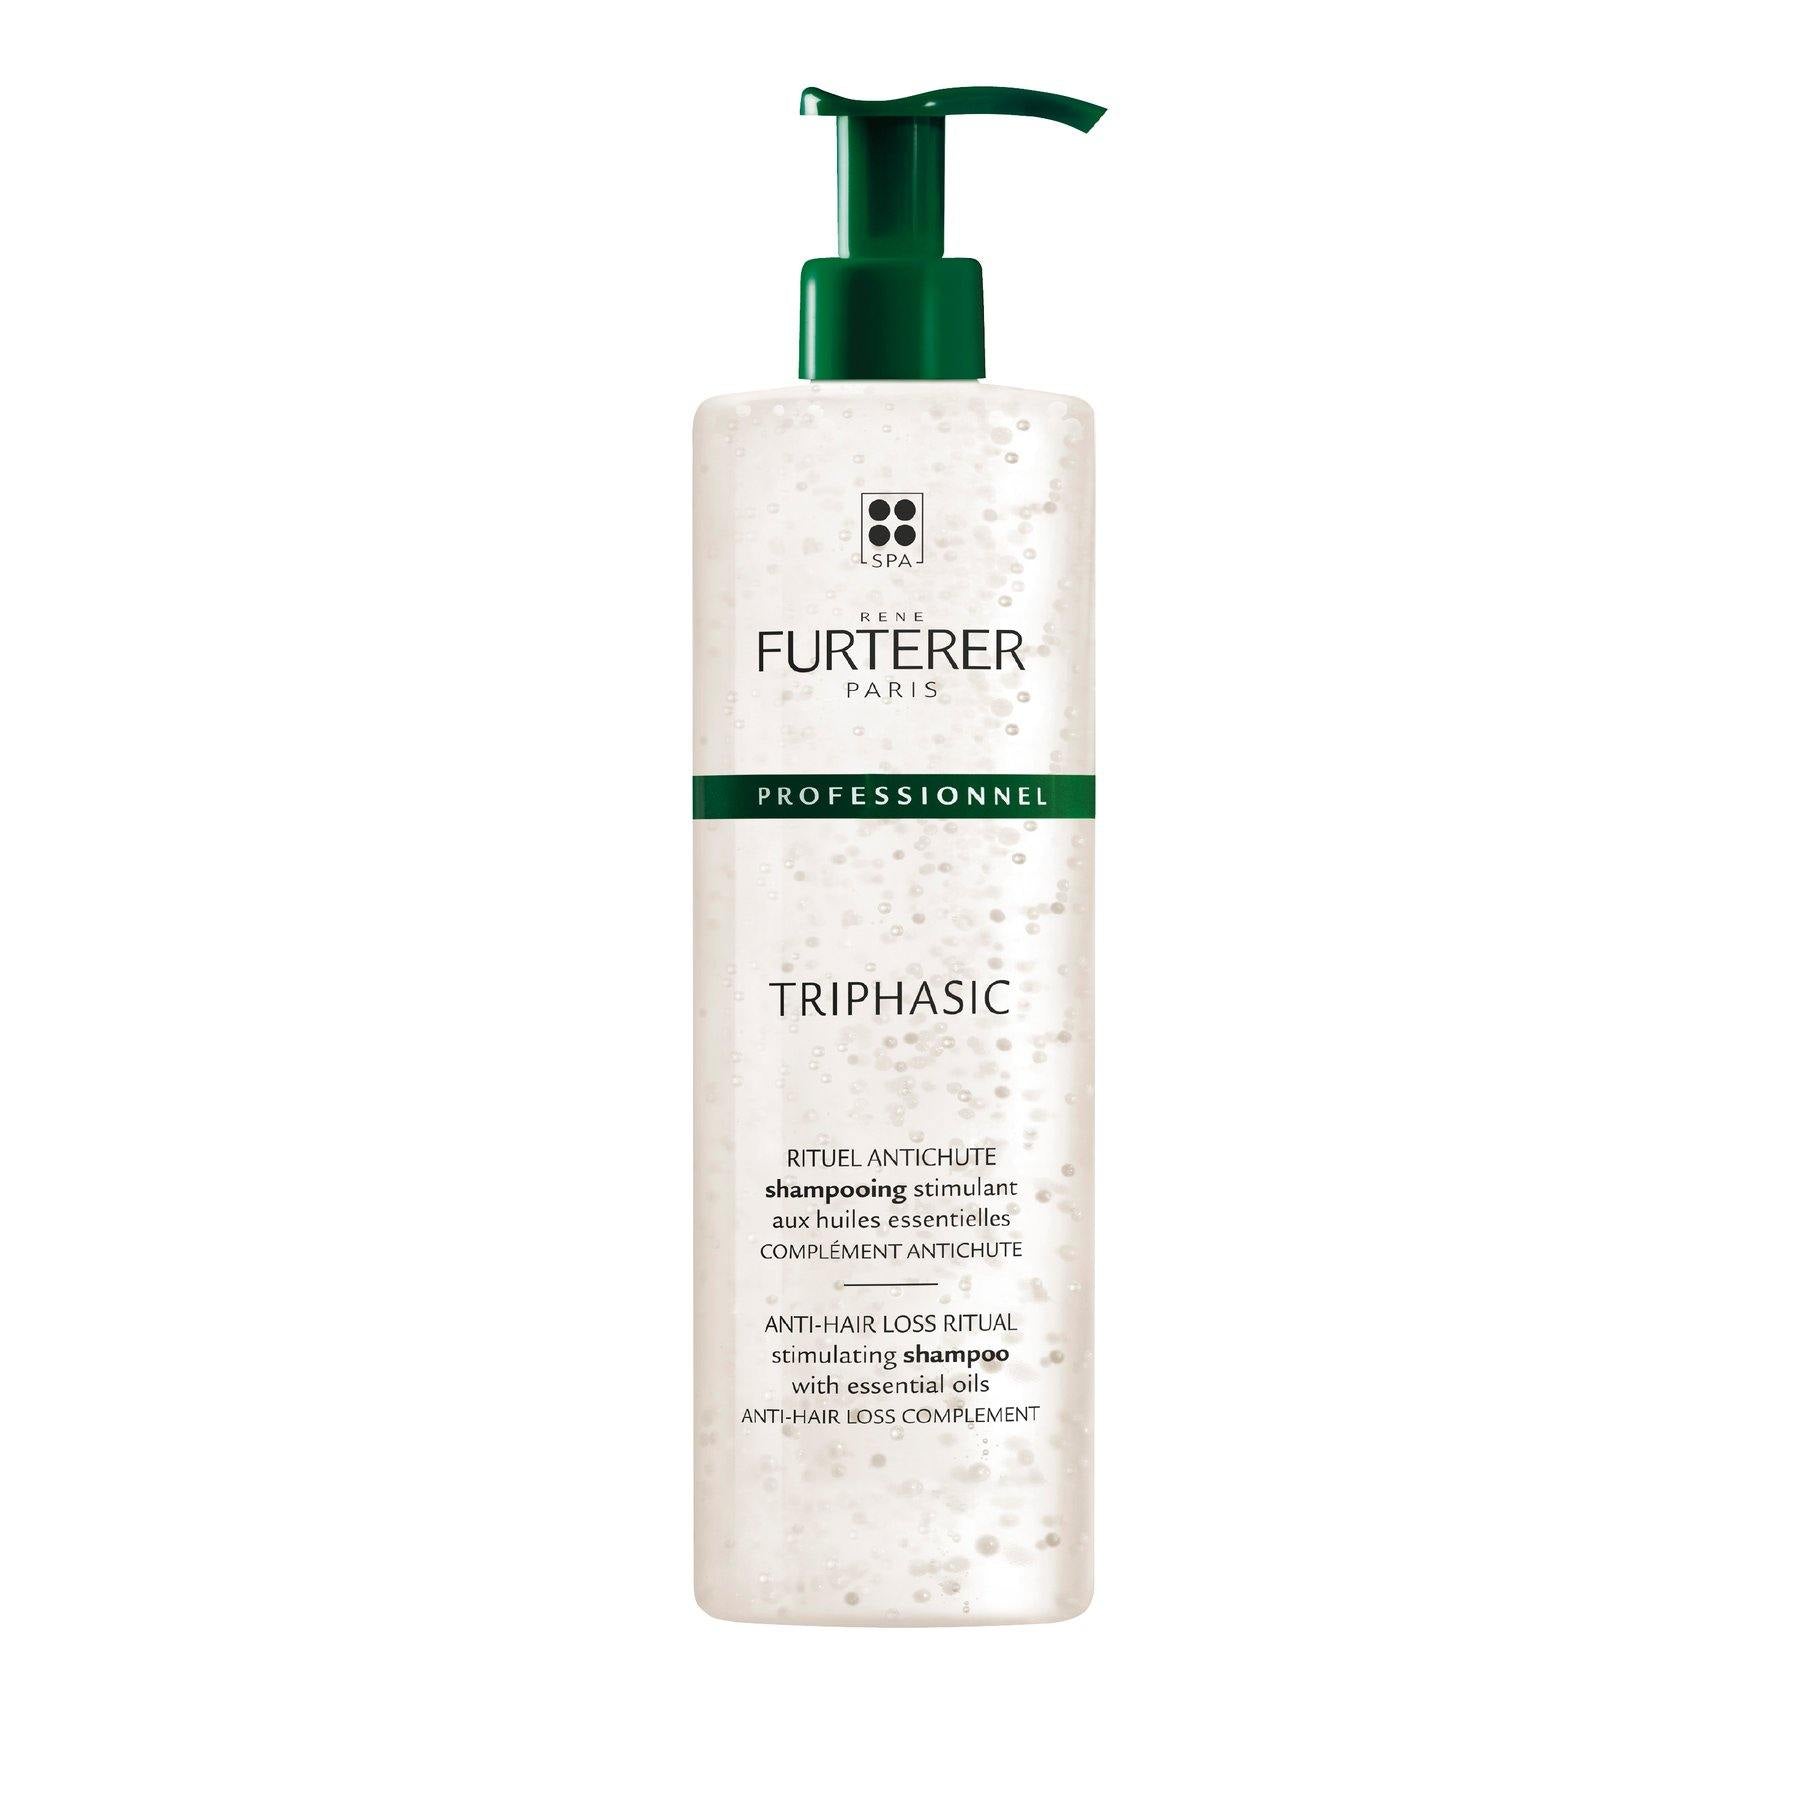 RENÉ FURTERER - Triphasic Stimulating Shampoo - 53 Karat